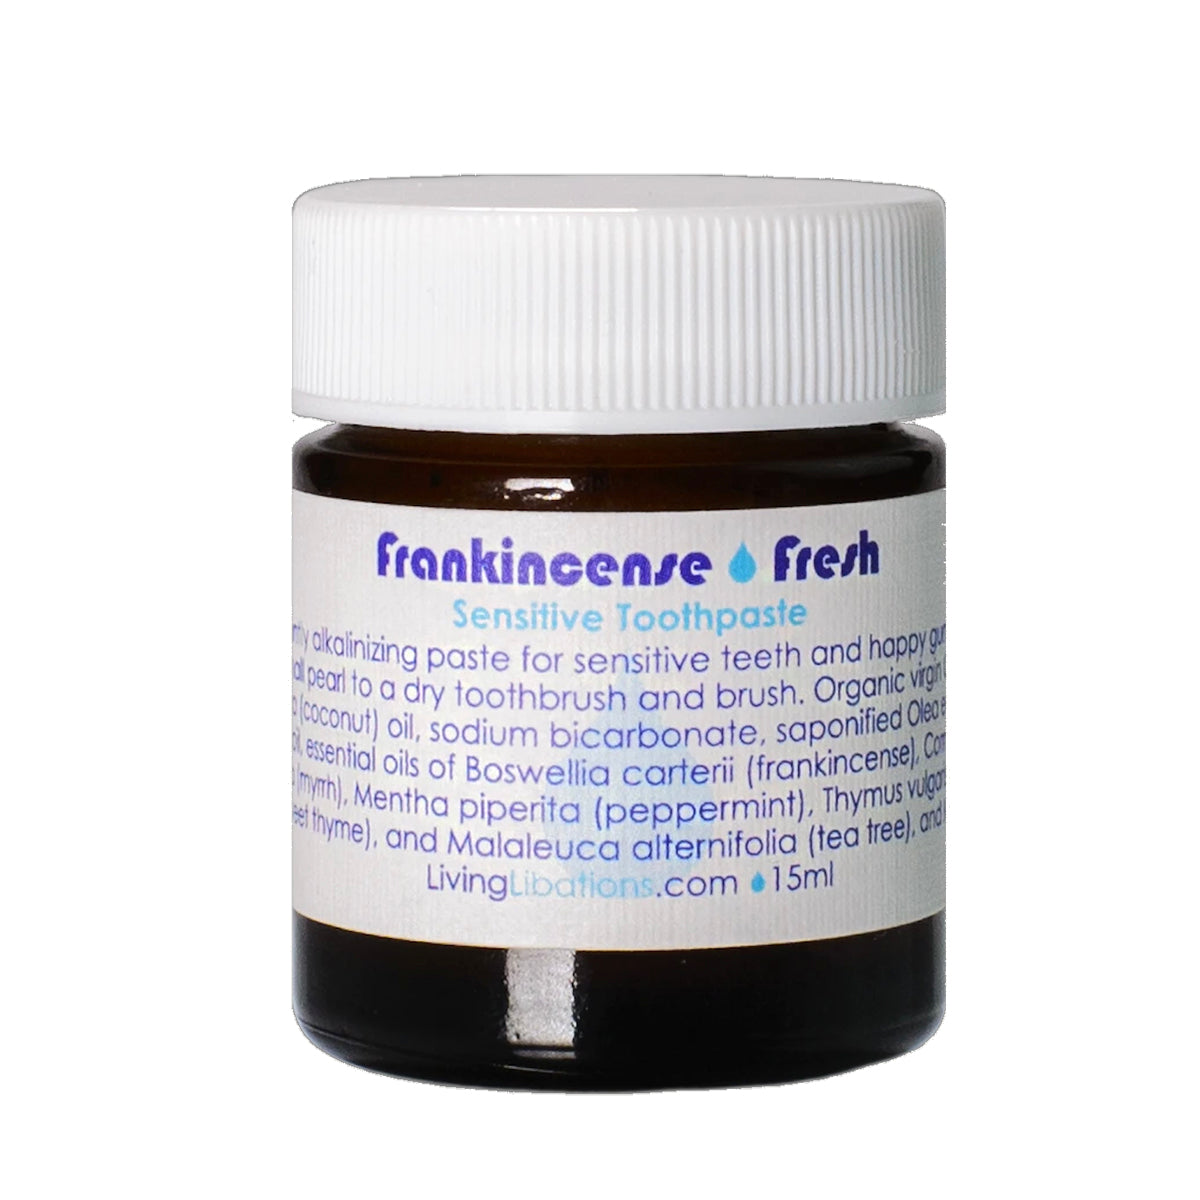 frankincense fresh sensitive toothpaste